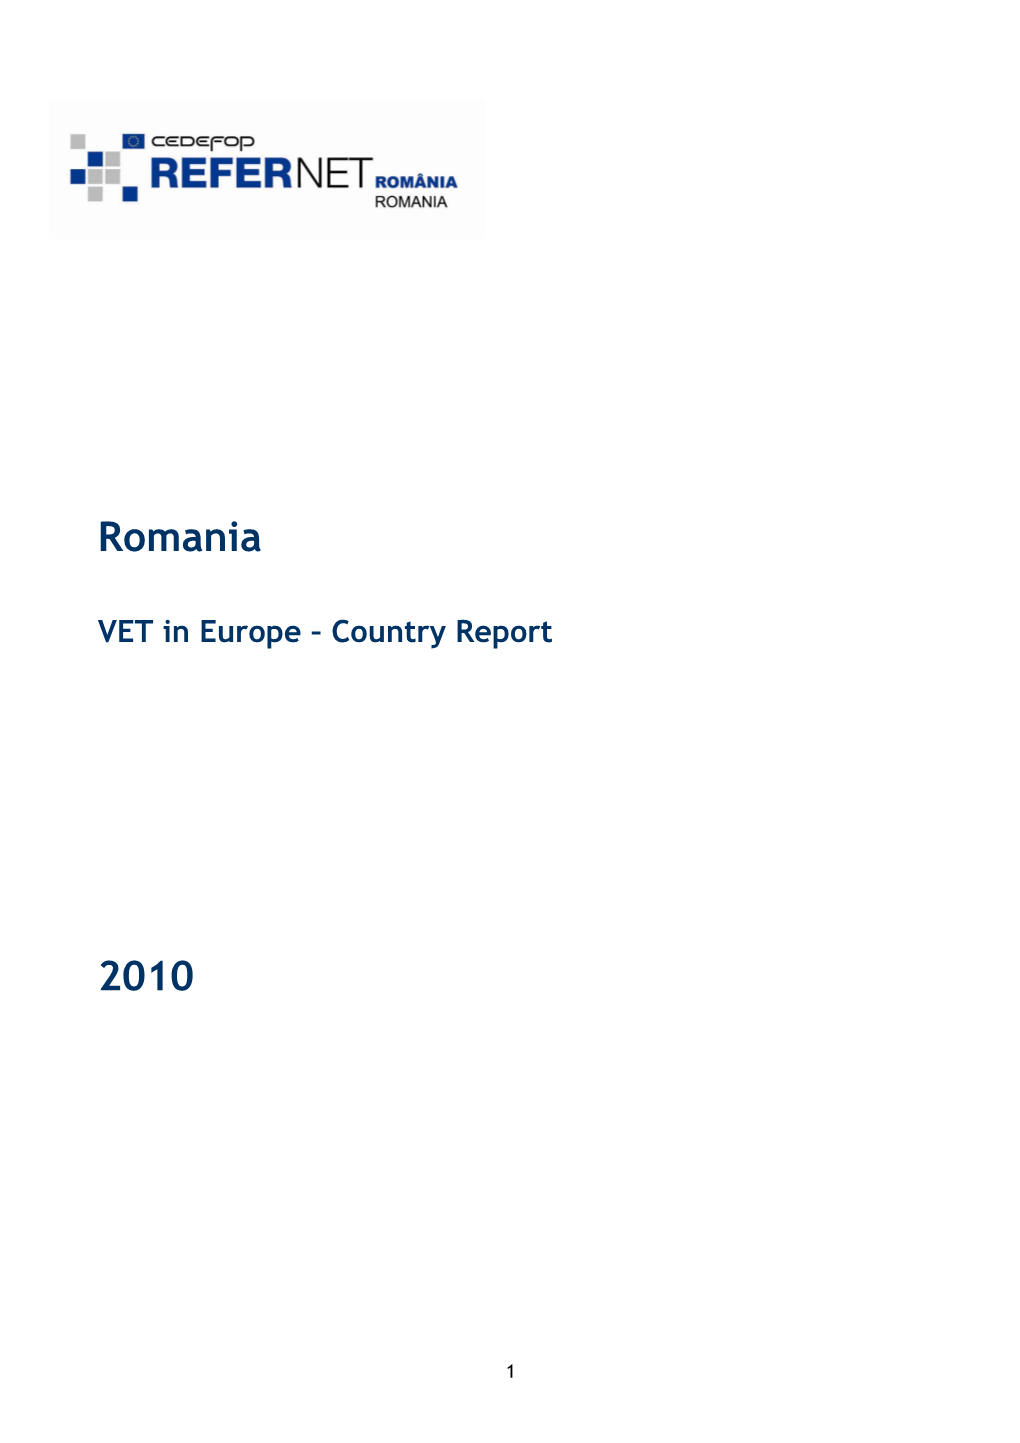 Romania 2010